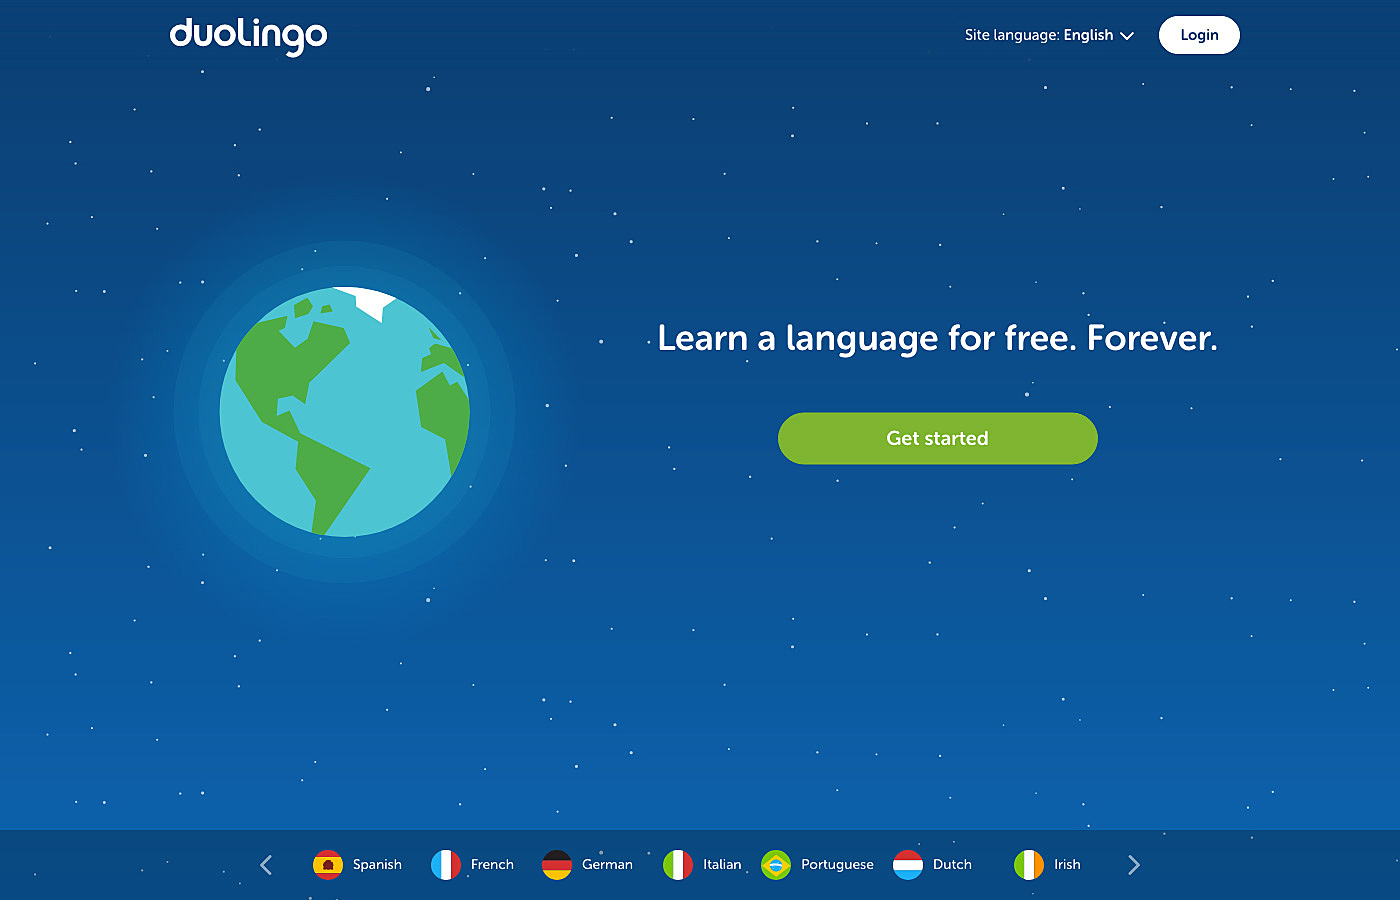 duolingo.com project - best education website design example